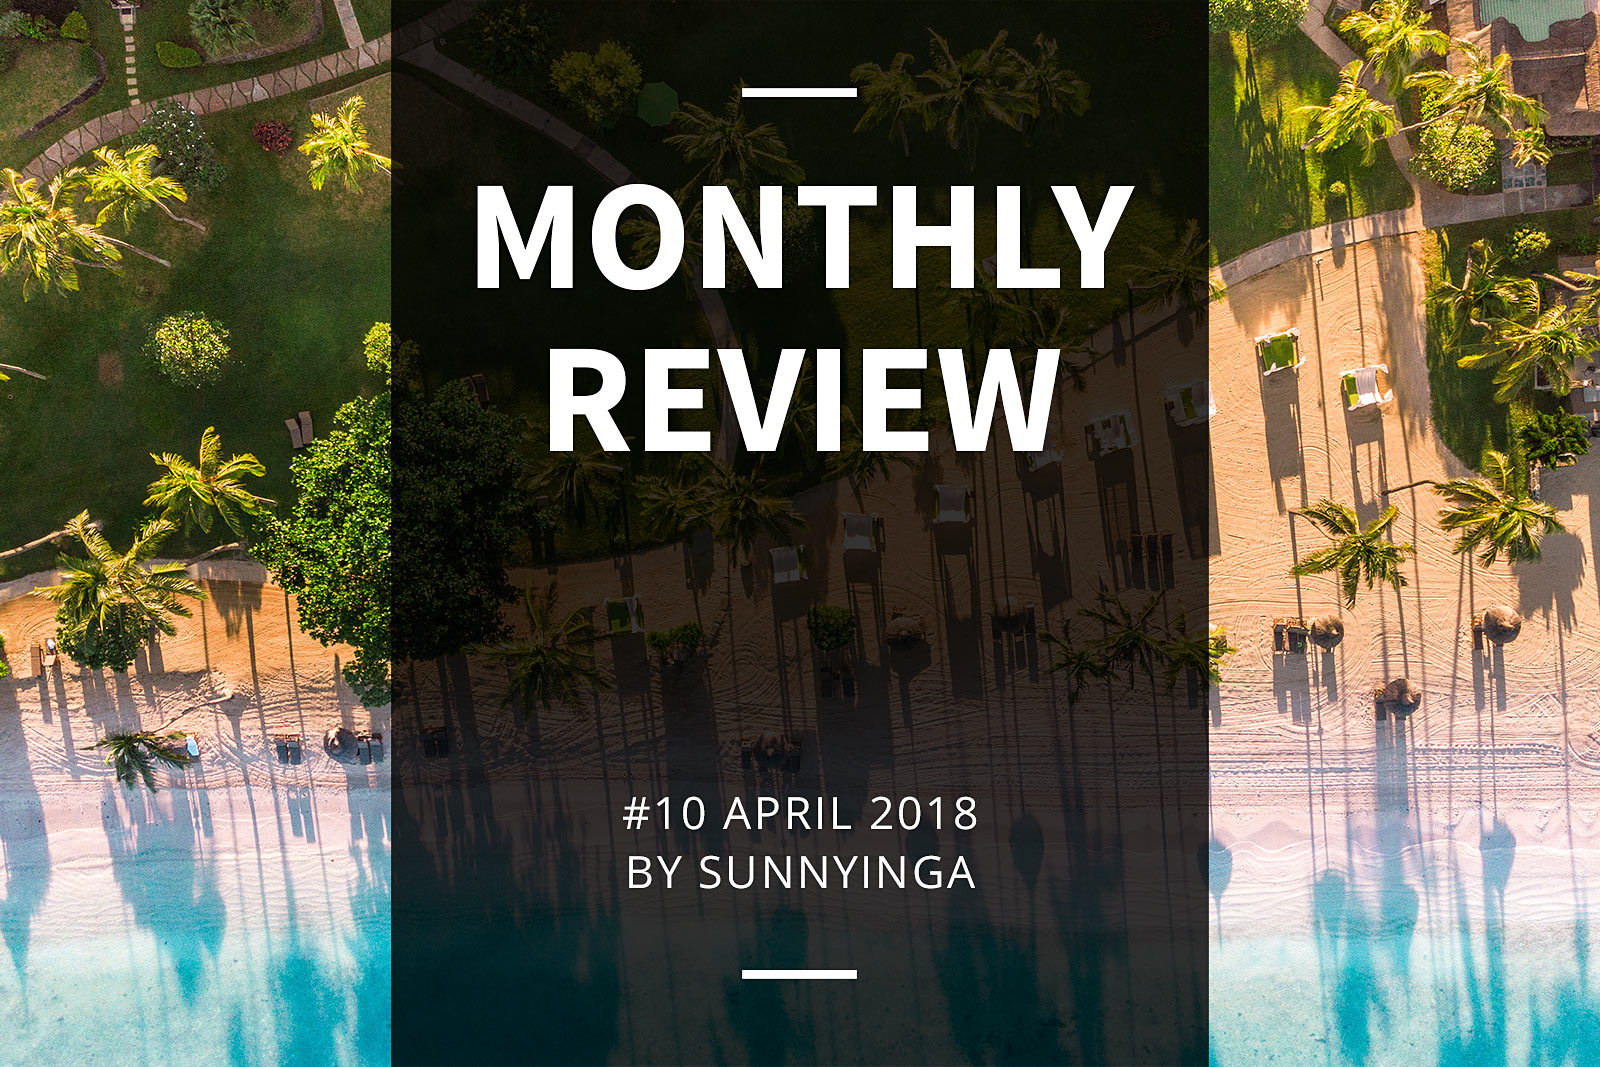 Sunnyinga Monthly Review Monatsrückblick #10 April 2018